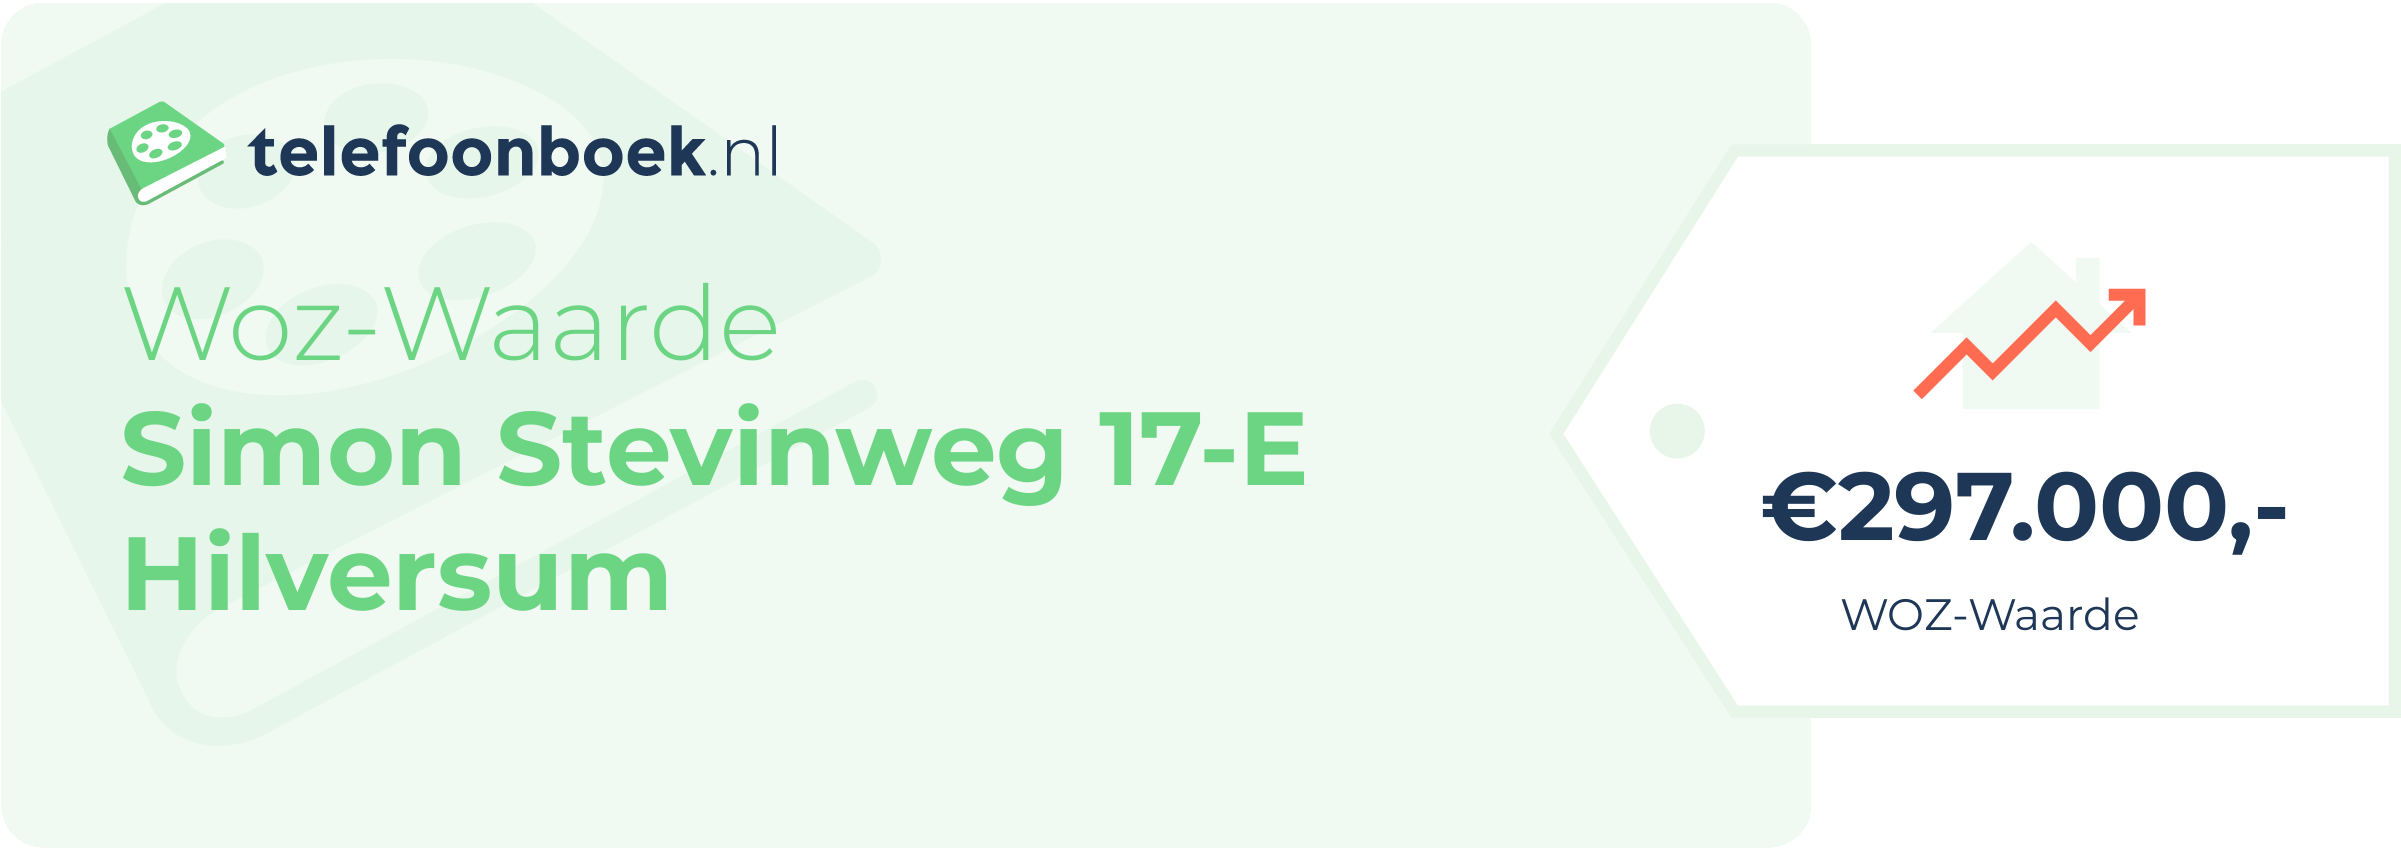 WOZ-waarde Simon Stevinweg 17-E Hilversum